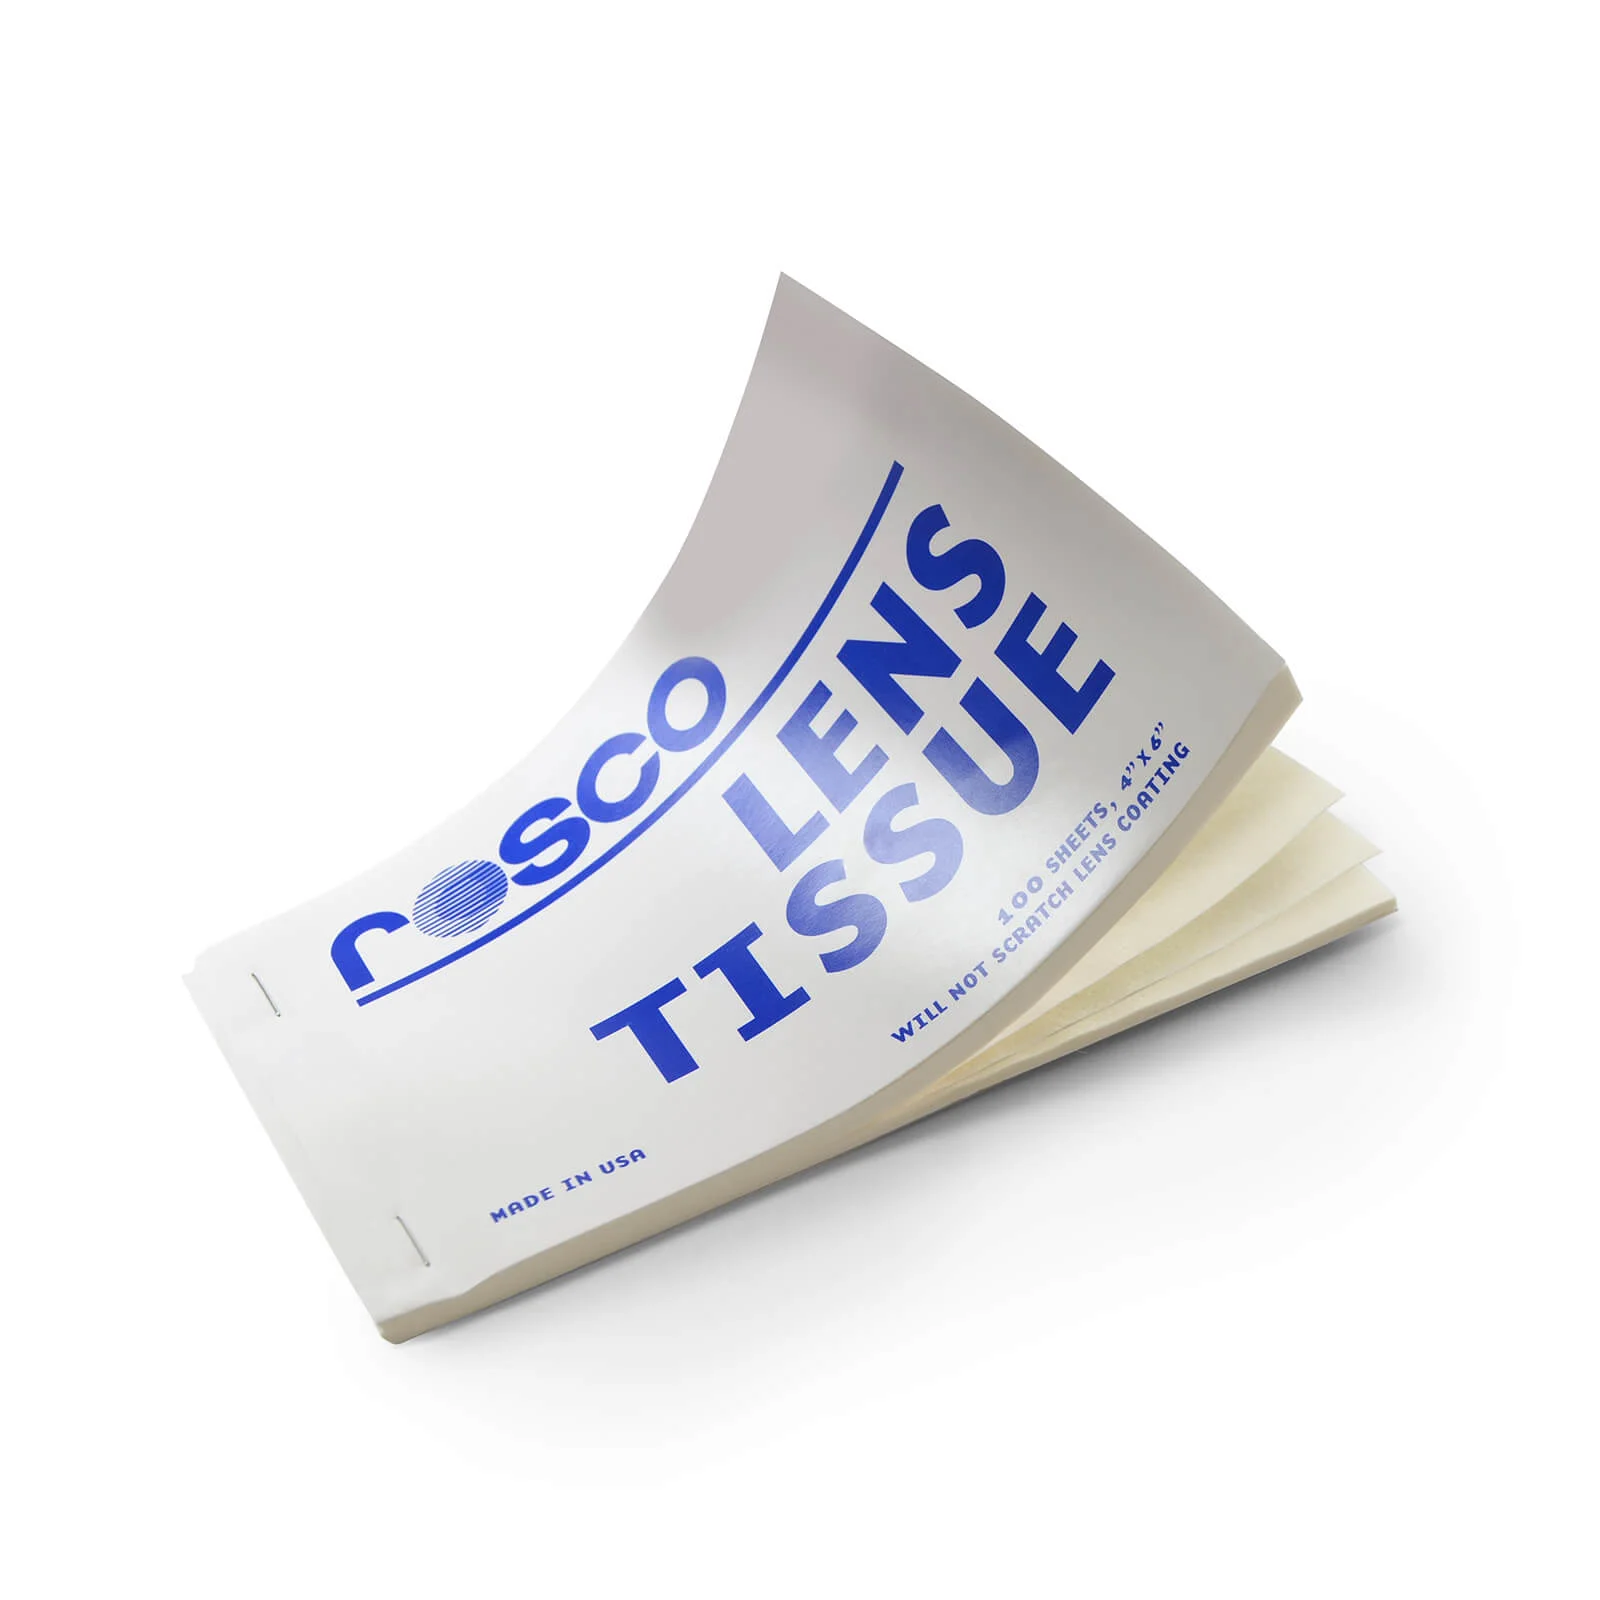 Rosco Lens Tissue салфетка для чистки линз